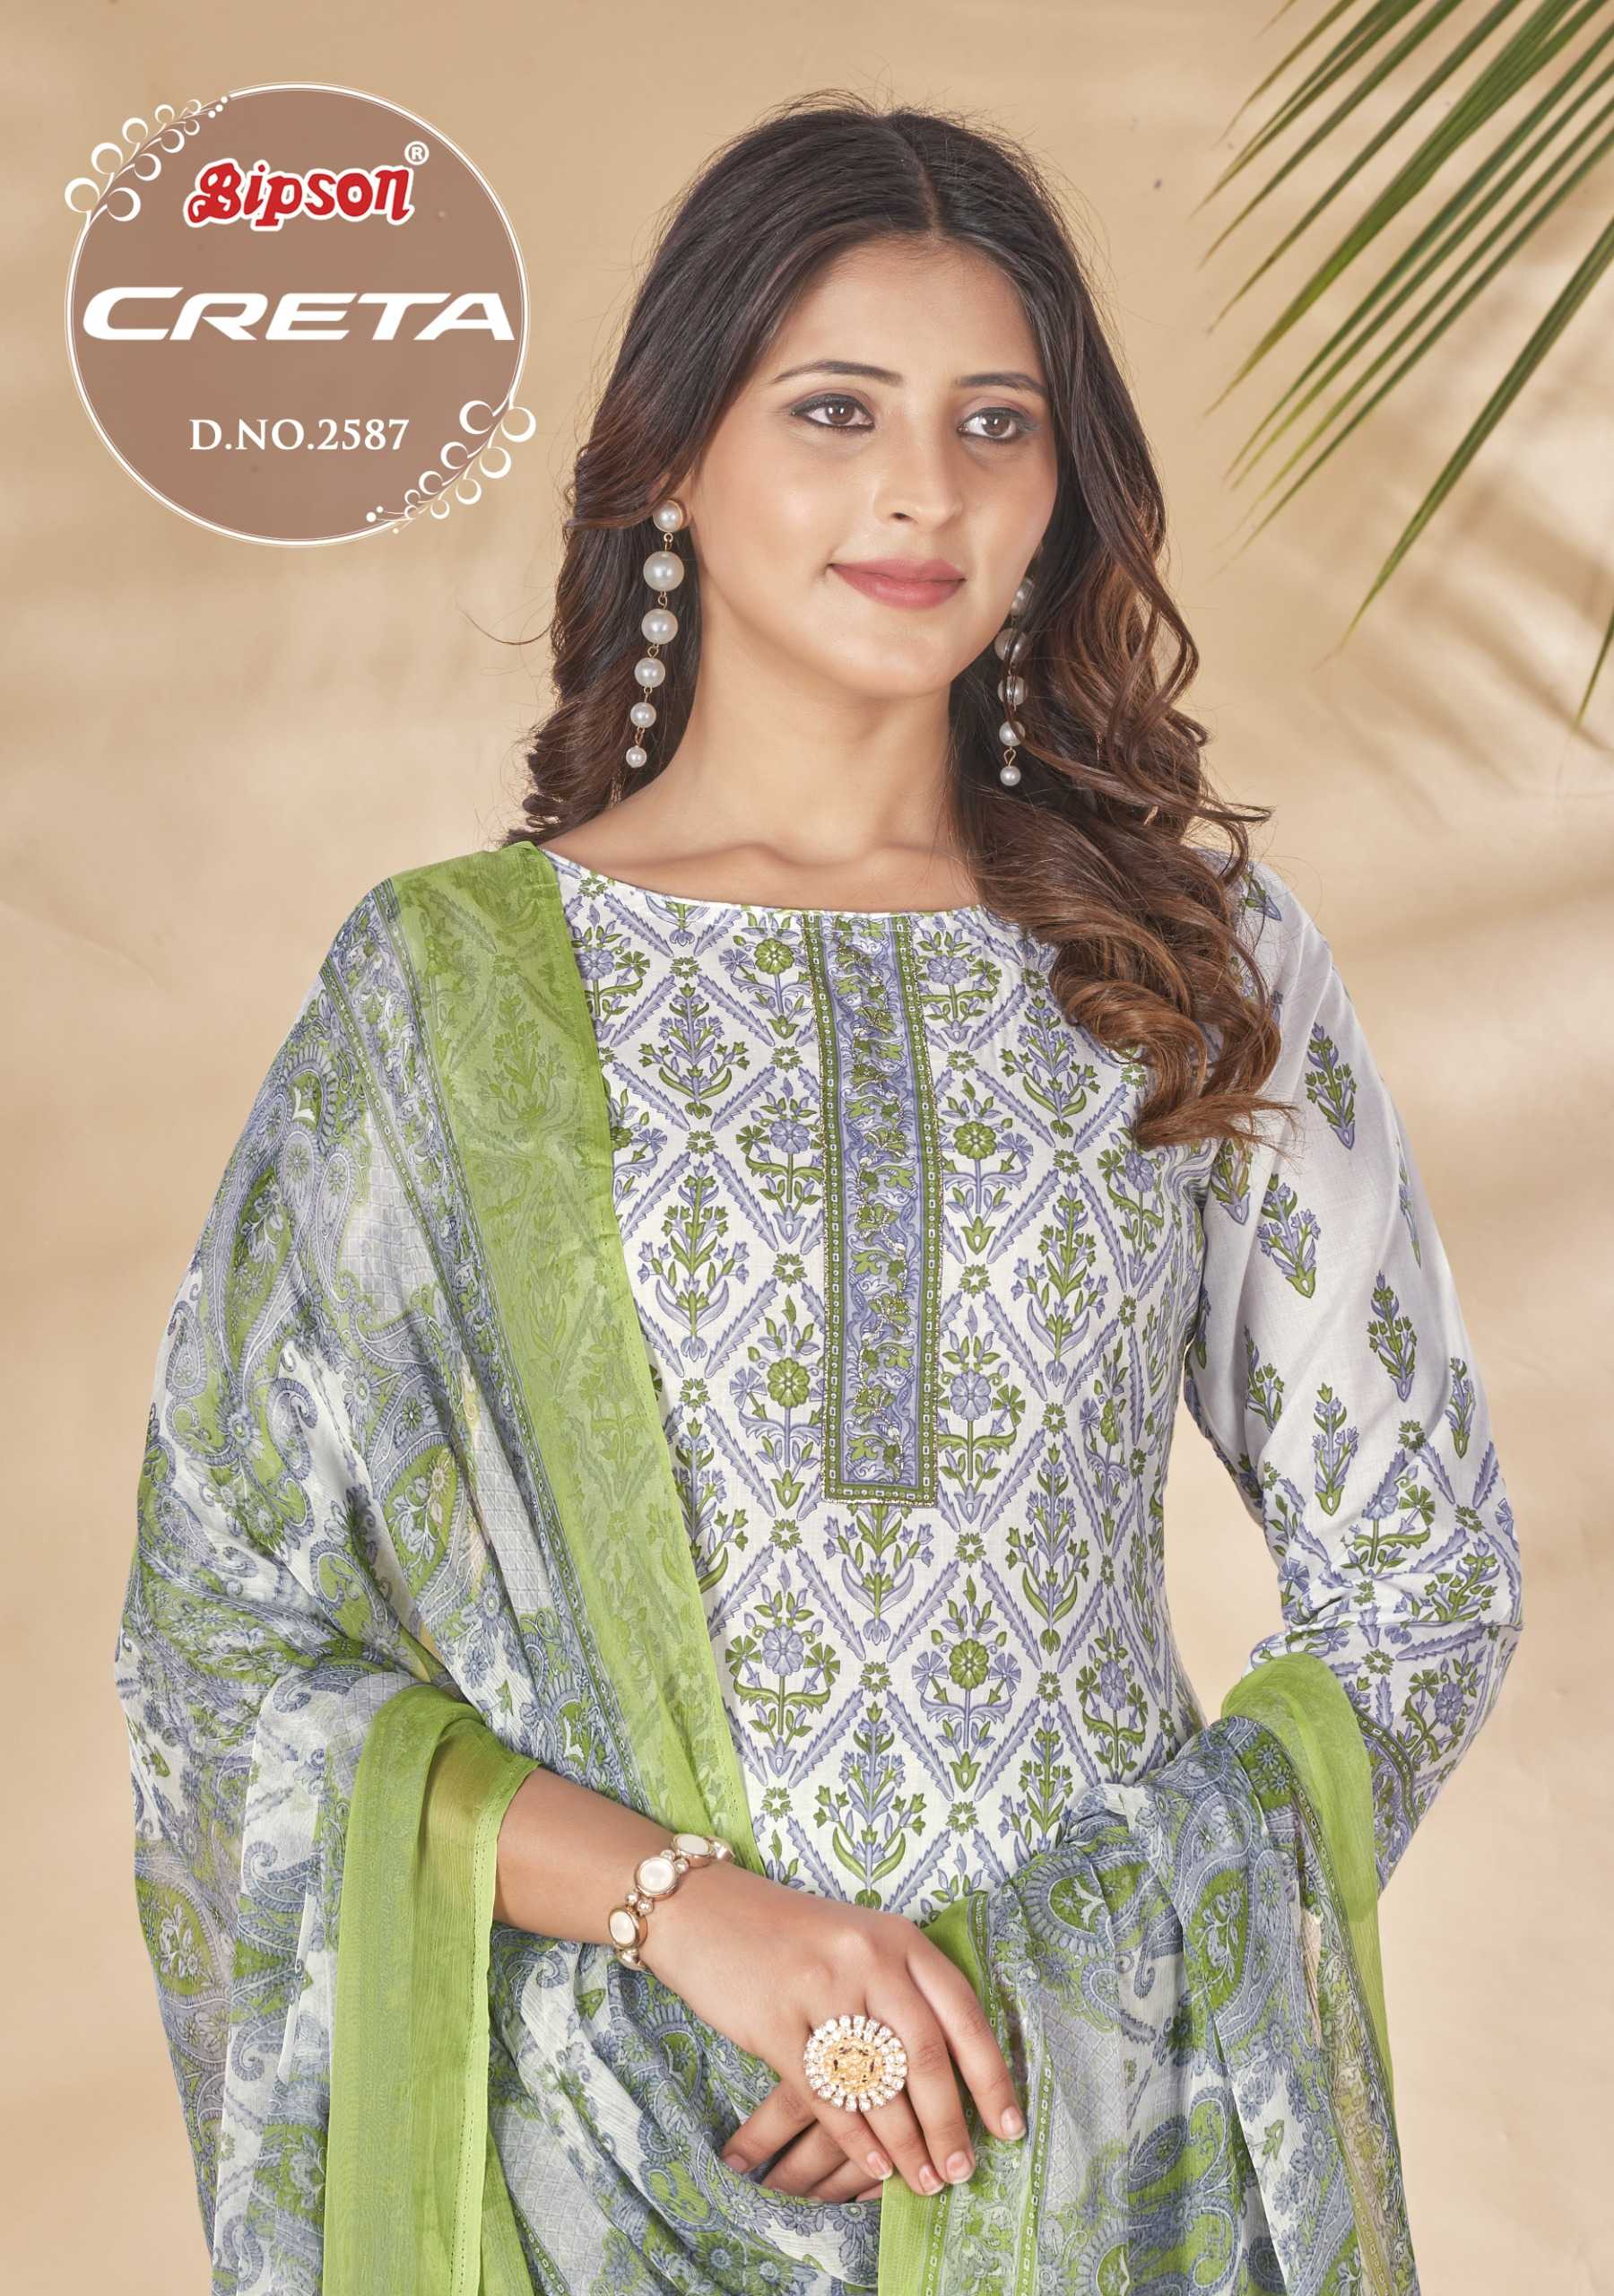 bipson creta 2587 regular wear unstitch printed salwar suit 